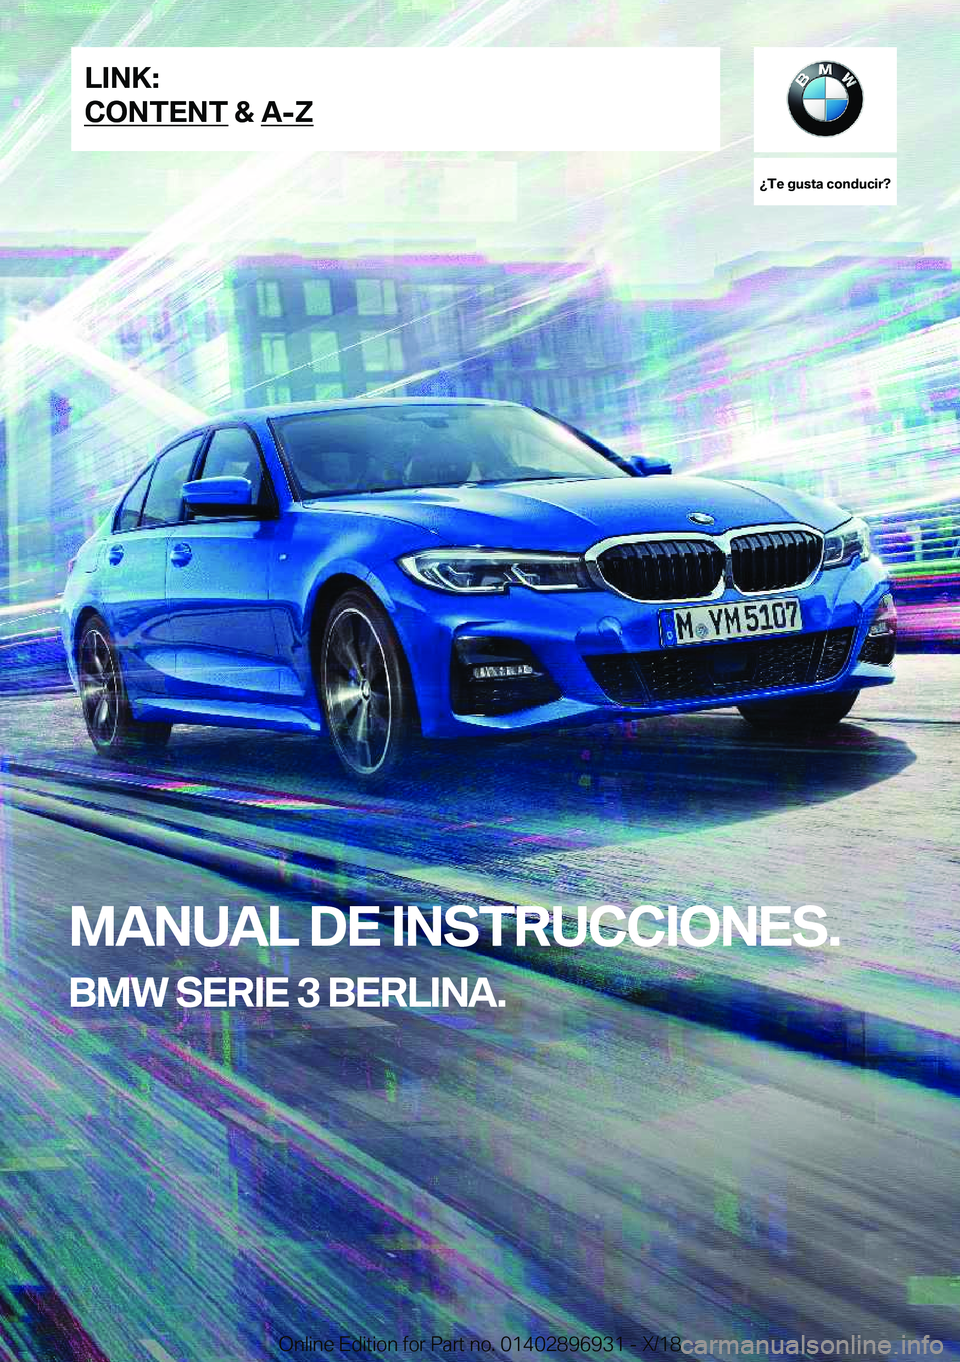 BMW 3 SERIES 2019  Manuales de Empleo (in Spanish) ��T�e��g�u�s�t�a��c�o�n�d�u�c�i�r� 
�M�A�N�U�A�L��D�E��I�N�S�T�R�U�C�C�I�O�N�E�S�.
�B�M�W��S�E�R�I�E��3��B�E�R�L�I�N�A�.�L�I�N�K�:
�C�O�N�T�E�N�T��&��A�-�Z�O�n�l�i�n�e��E�d�i�t�i�o�n��f�o�